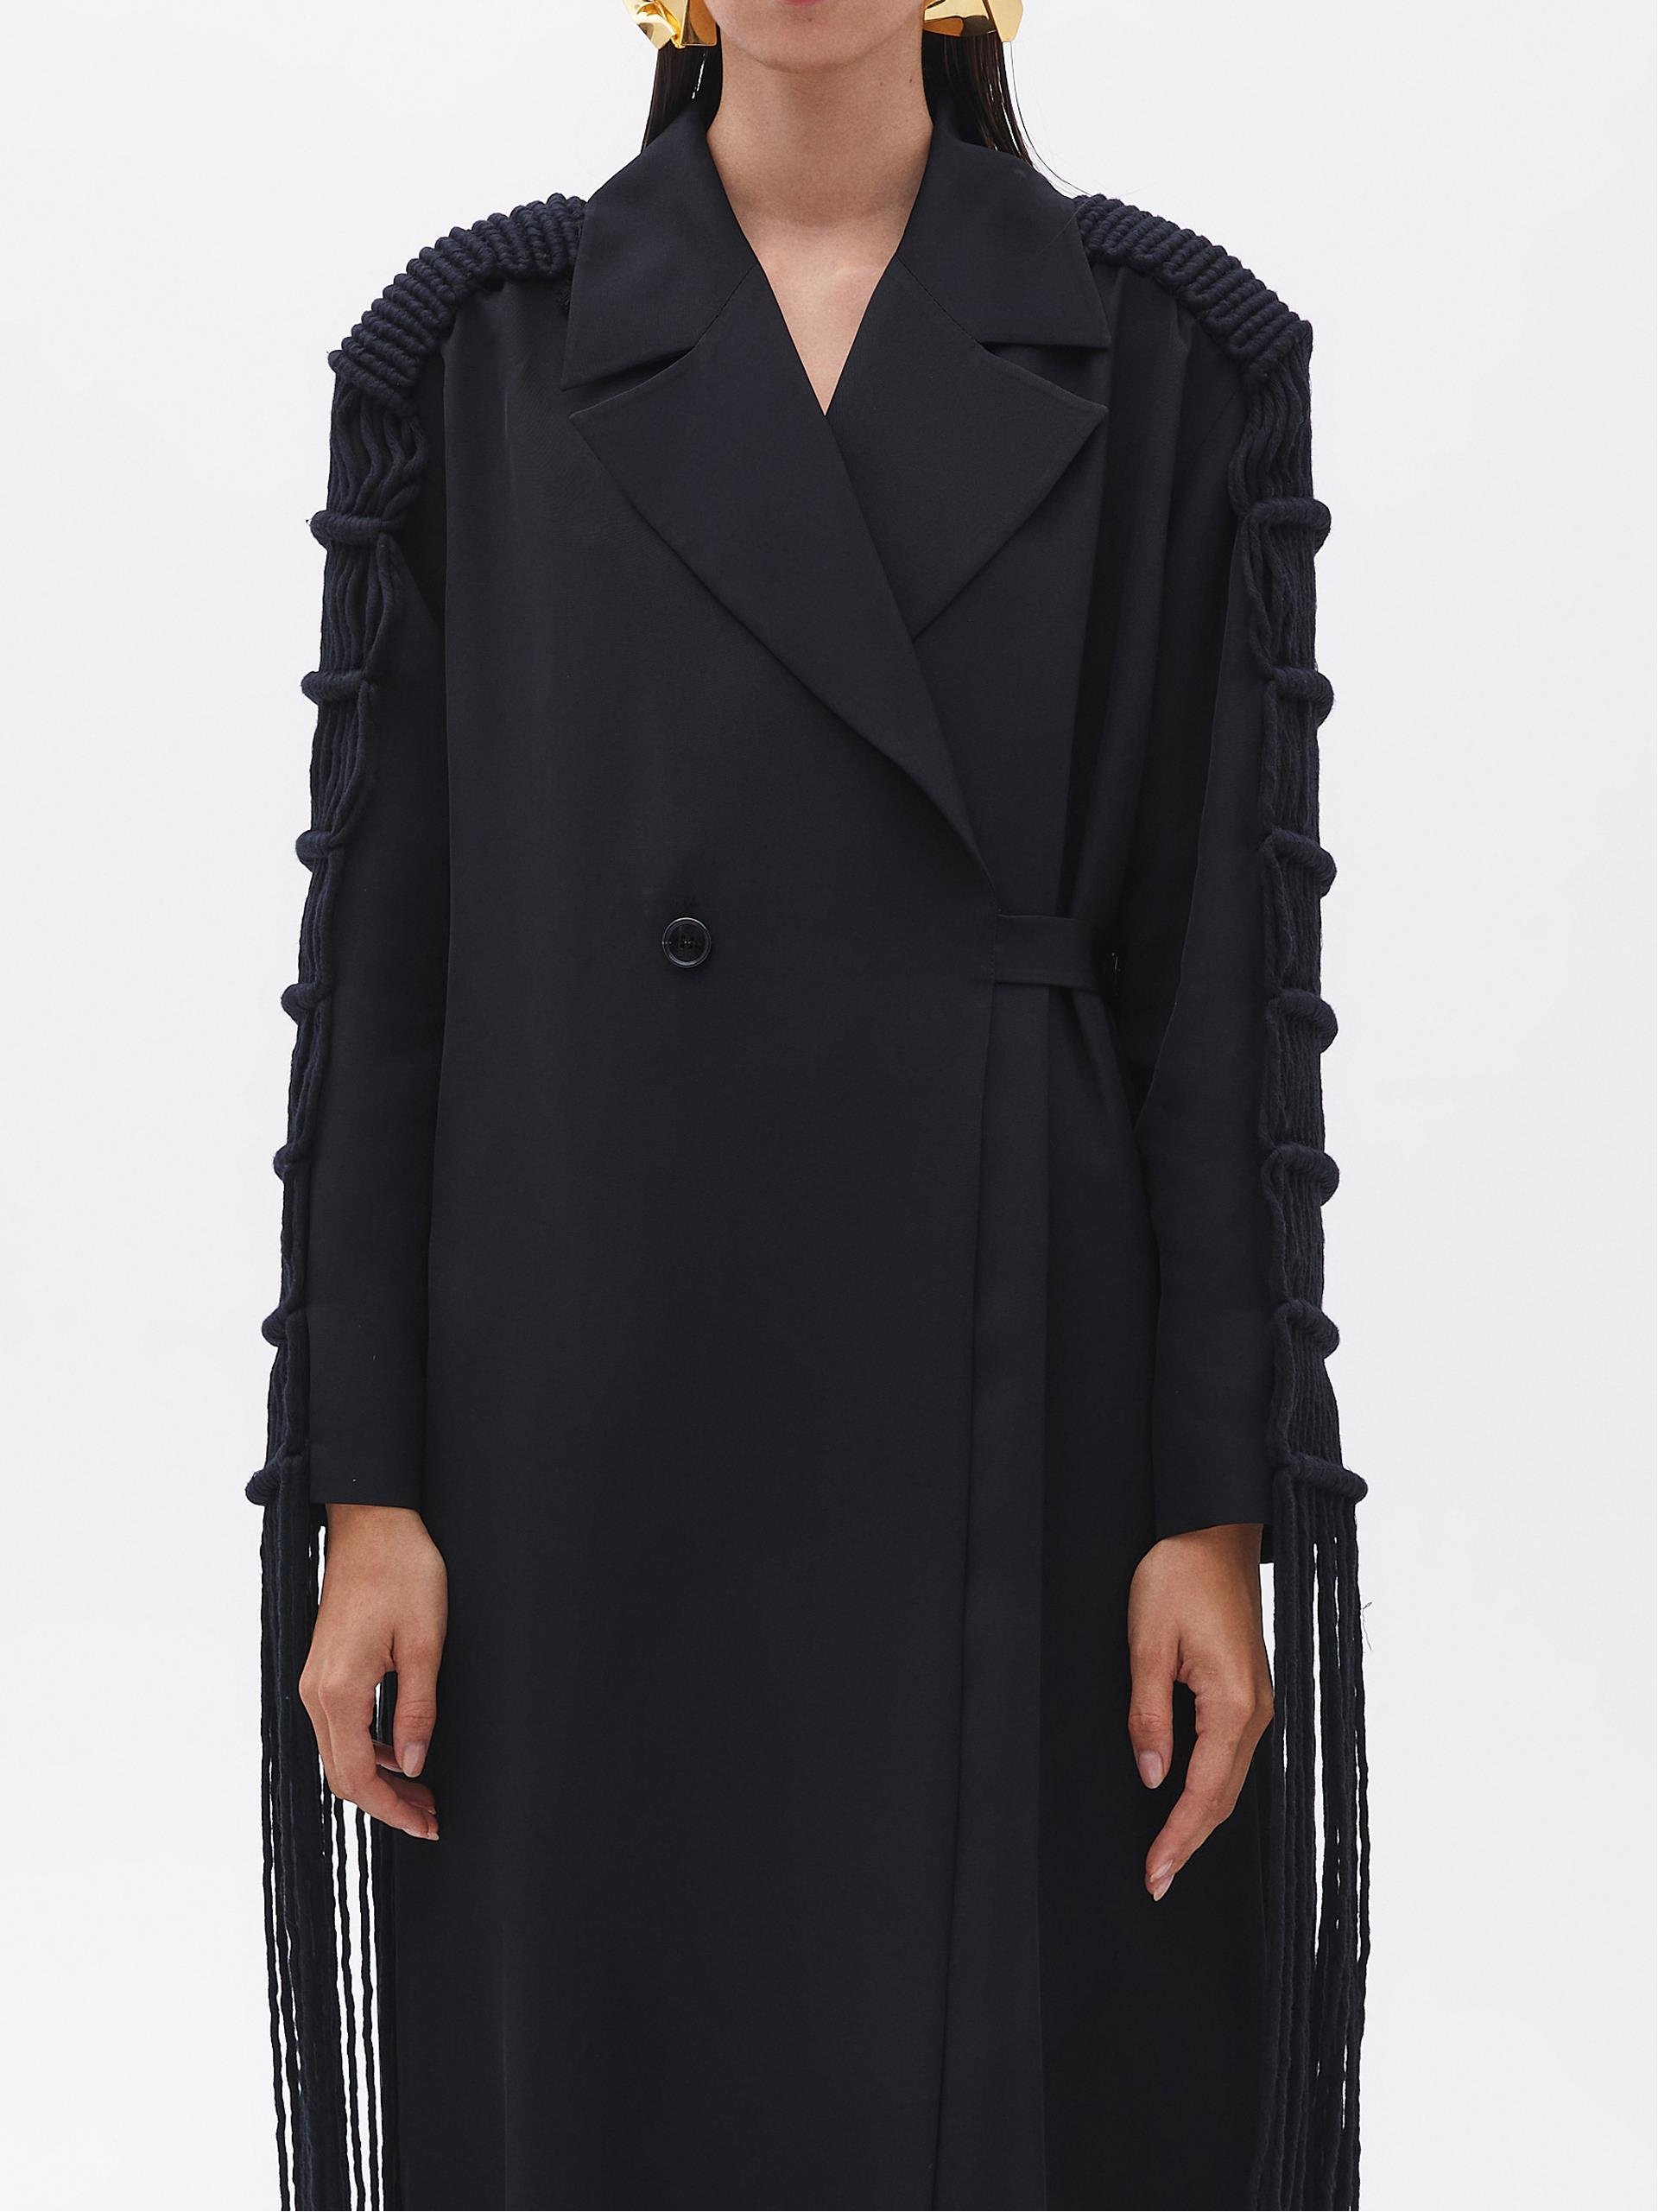 Black Coat with Macrame Sleeve Detail